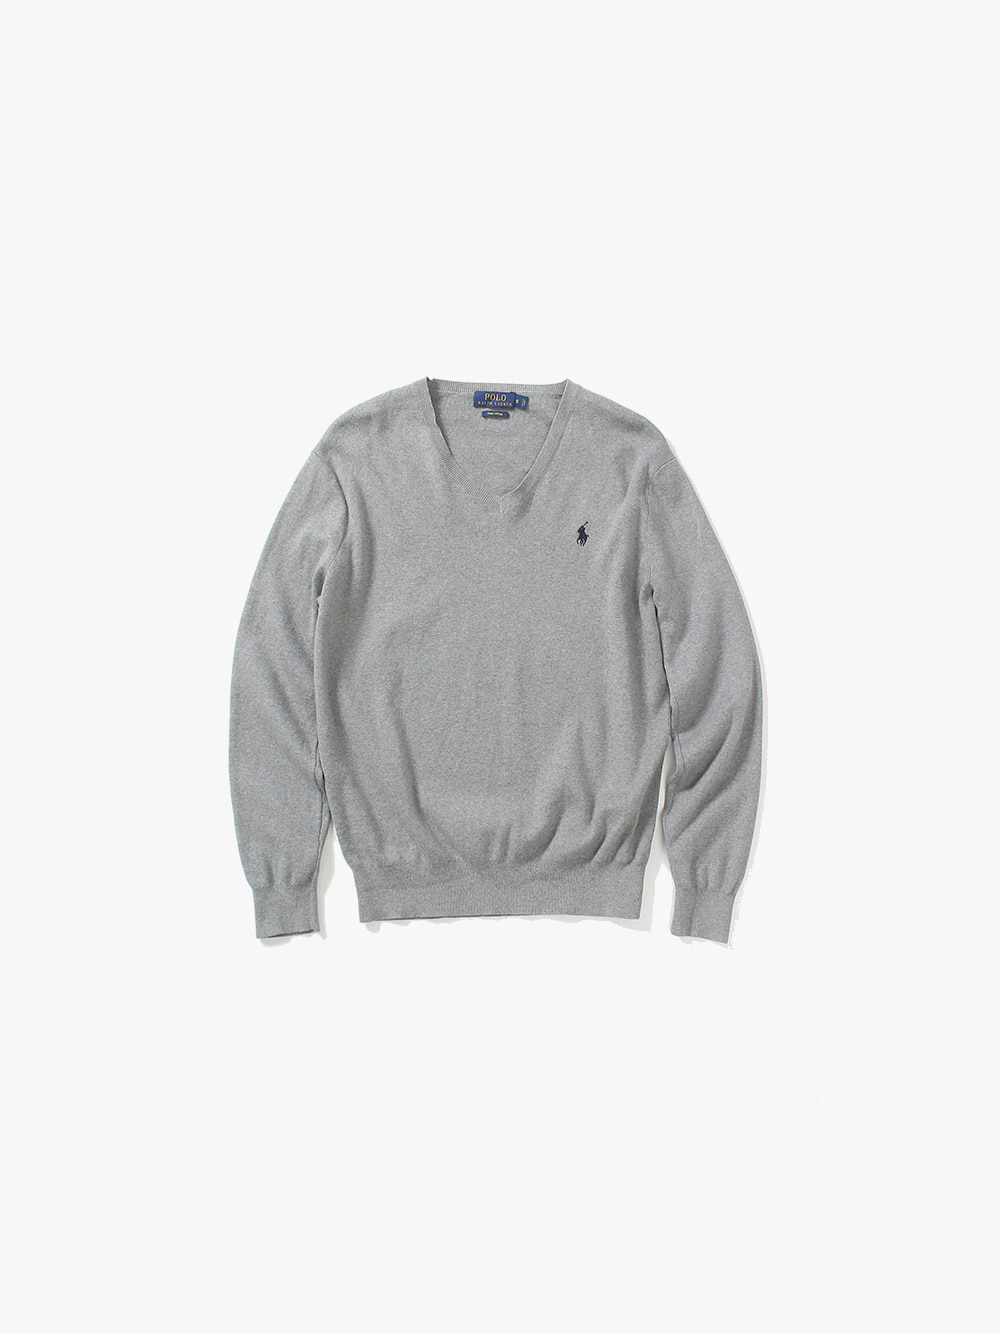 [ S ] Polo Ralph Lauren Sweater (6279)